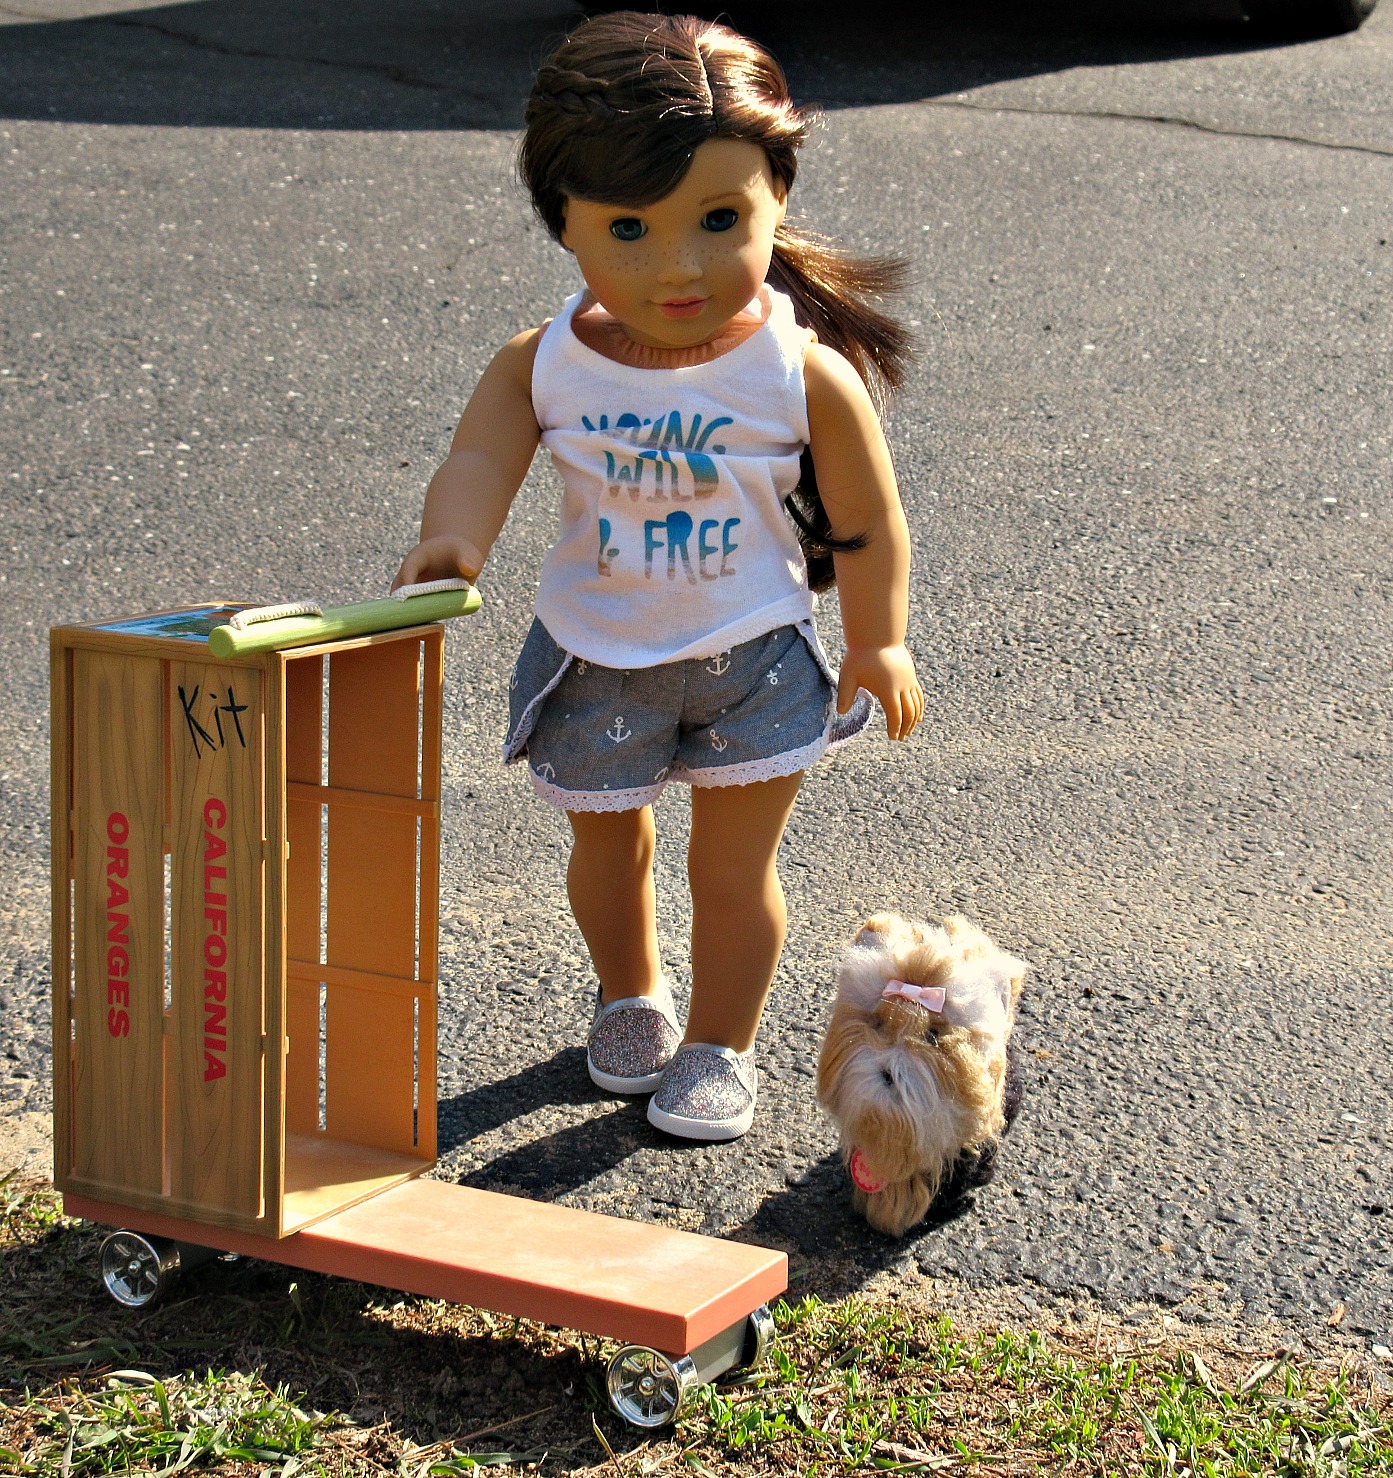 American girl doll Kits scooter.jpg